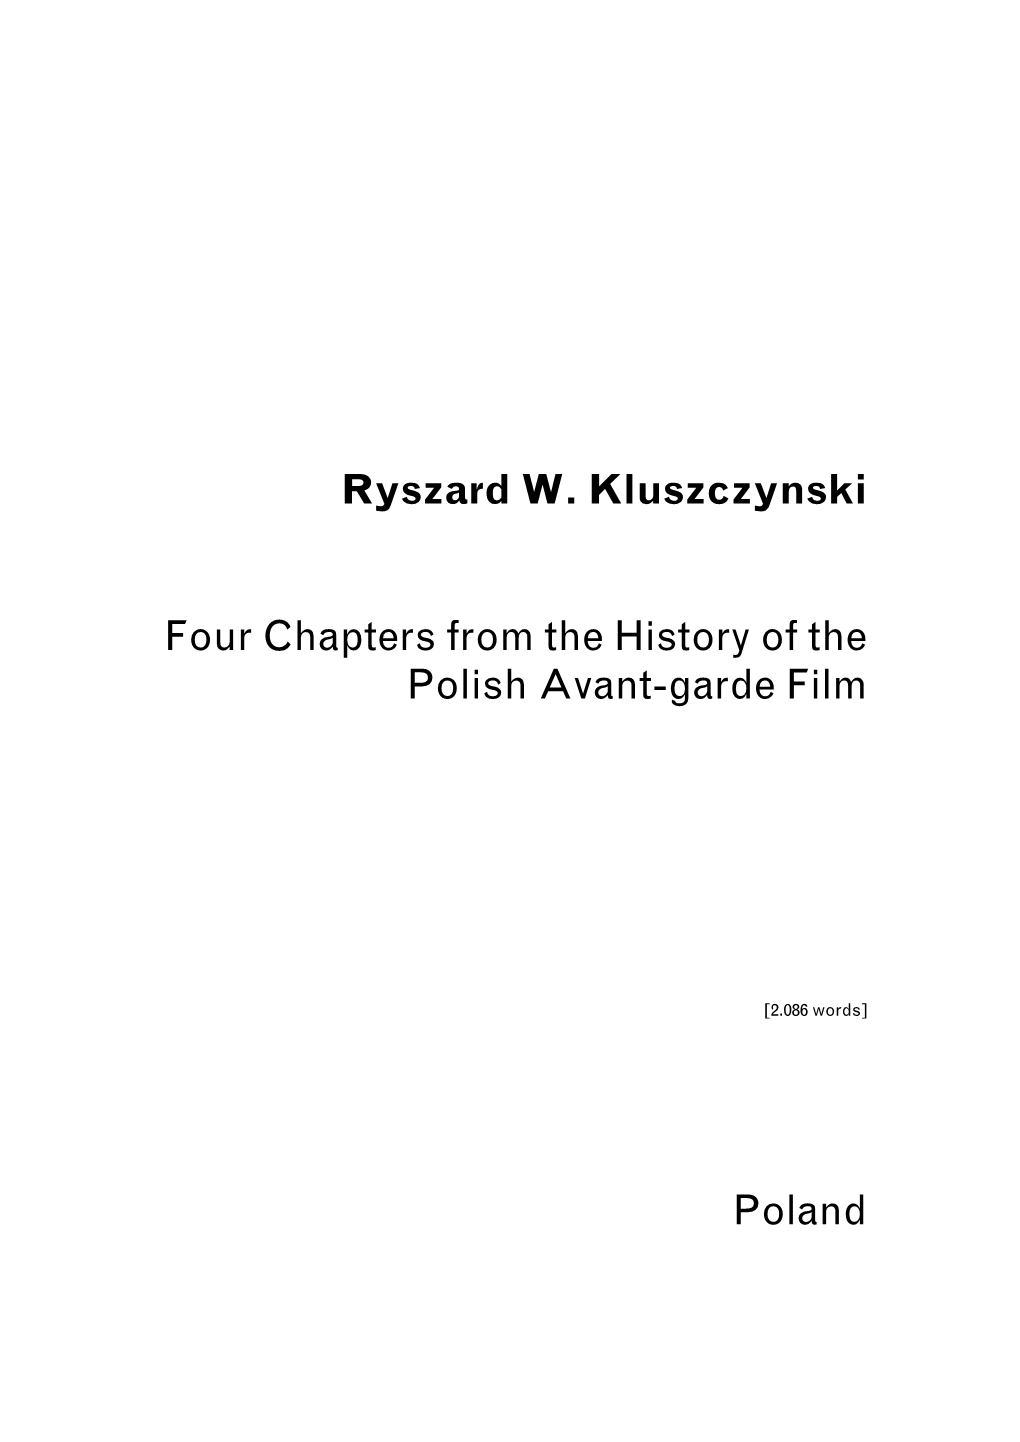 Ryszard W. Kluszczynski Four Chapters from the History of the Polish Avant-Garde Film